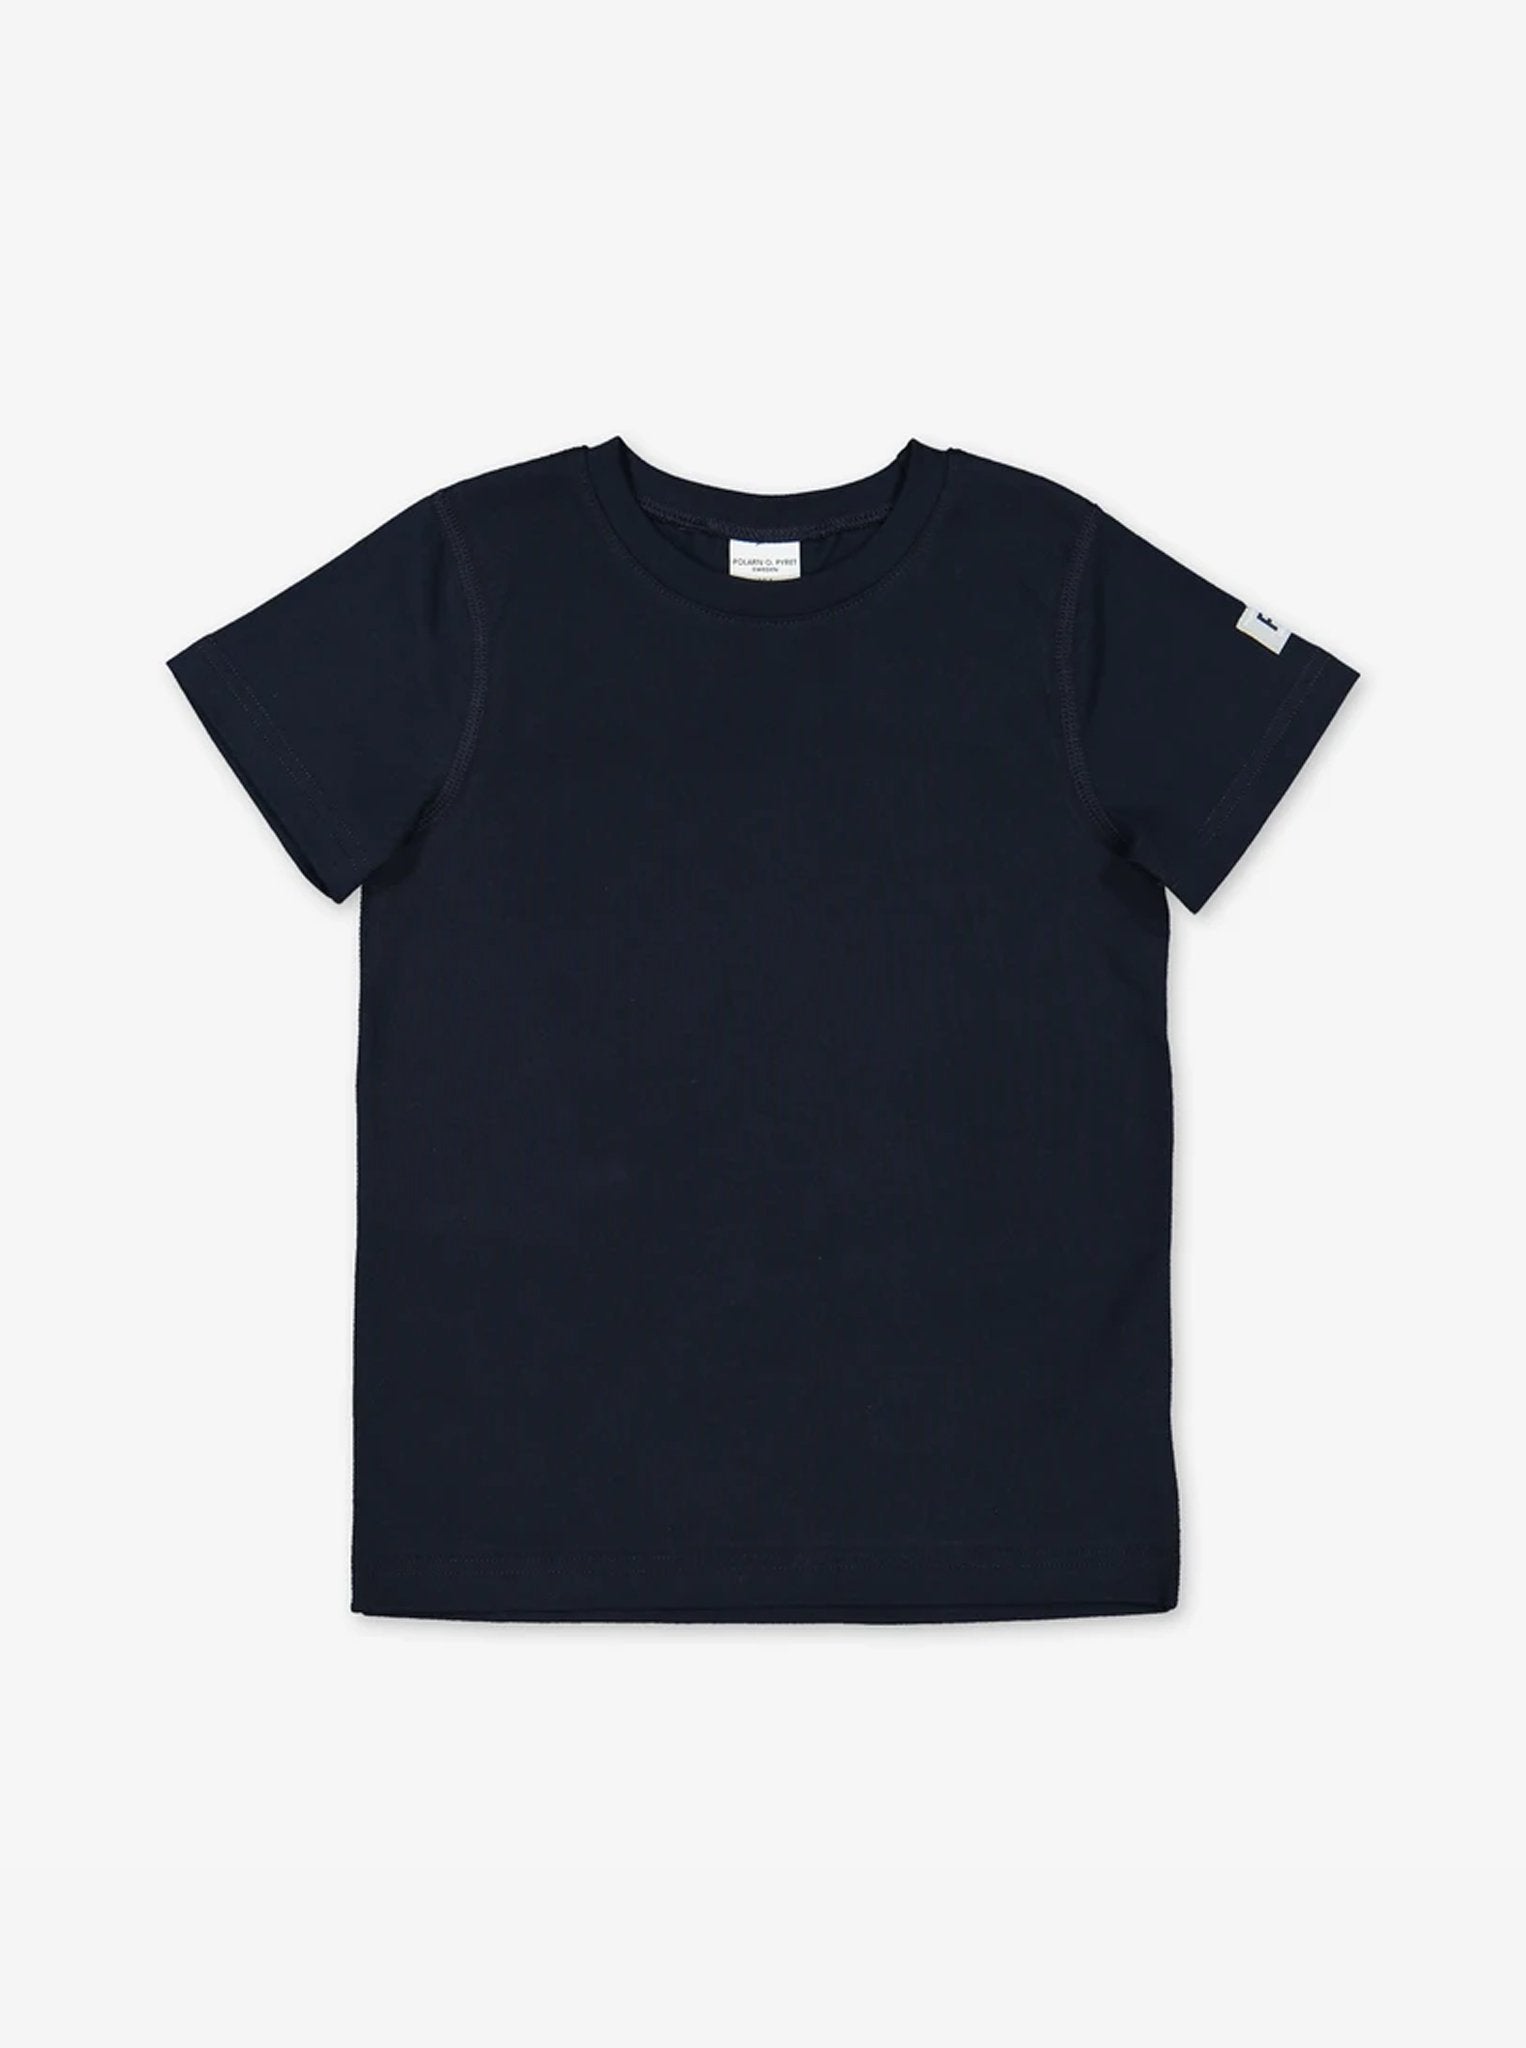 navy blue classic kids t-shirt, ethical organic cotton, polarn o. pyret quality